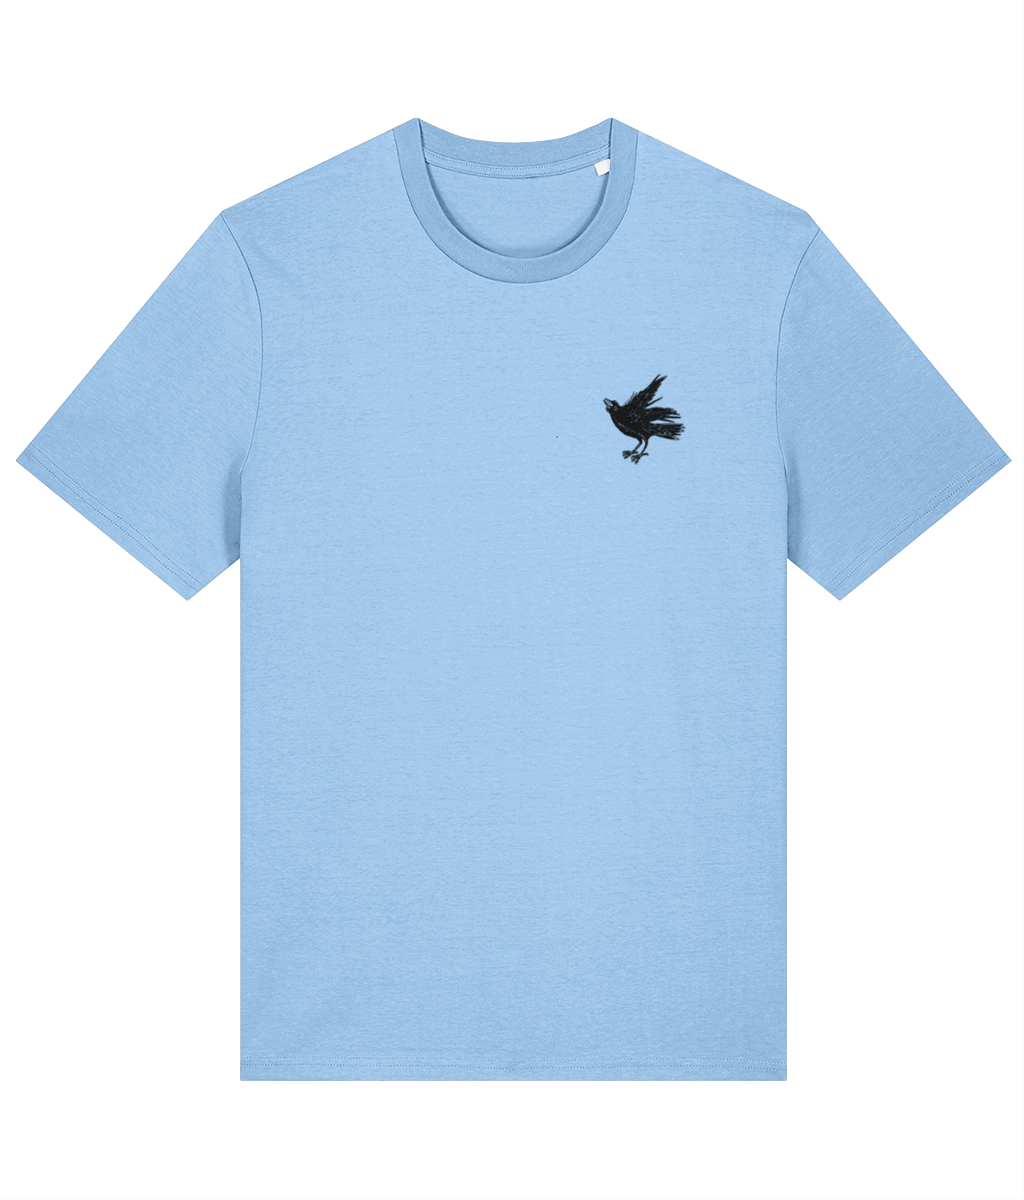 Unisex Tshirt - Signature Black Crow